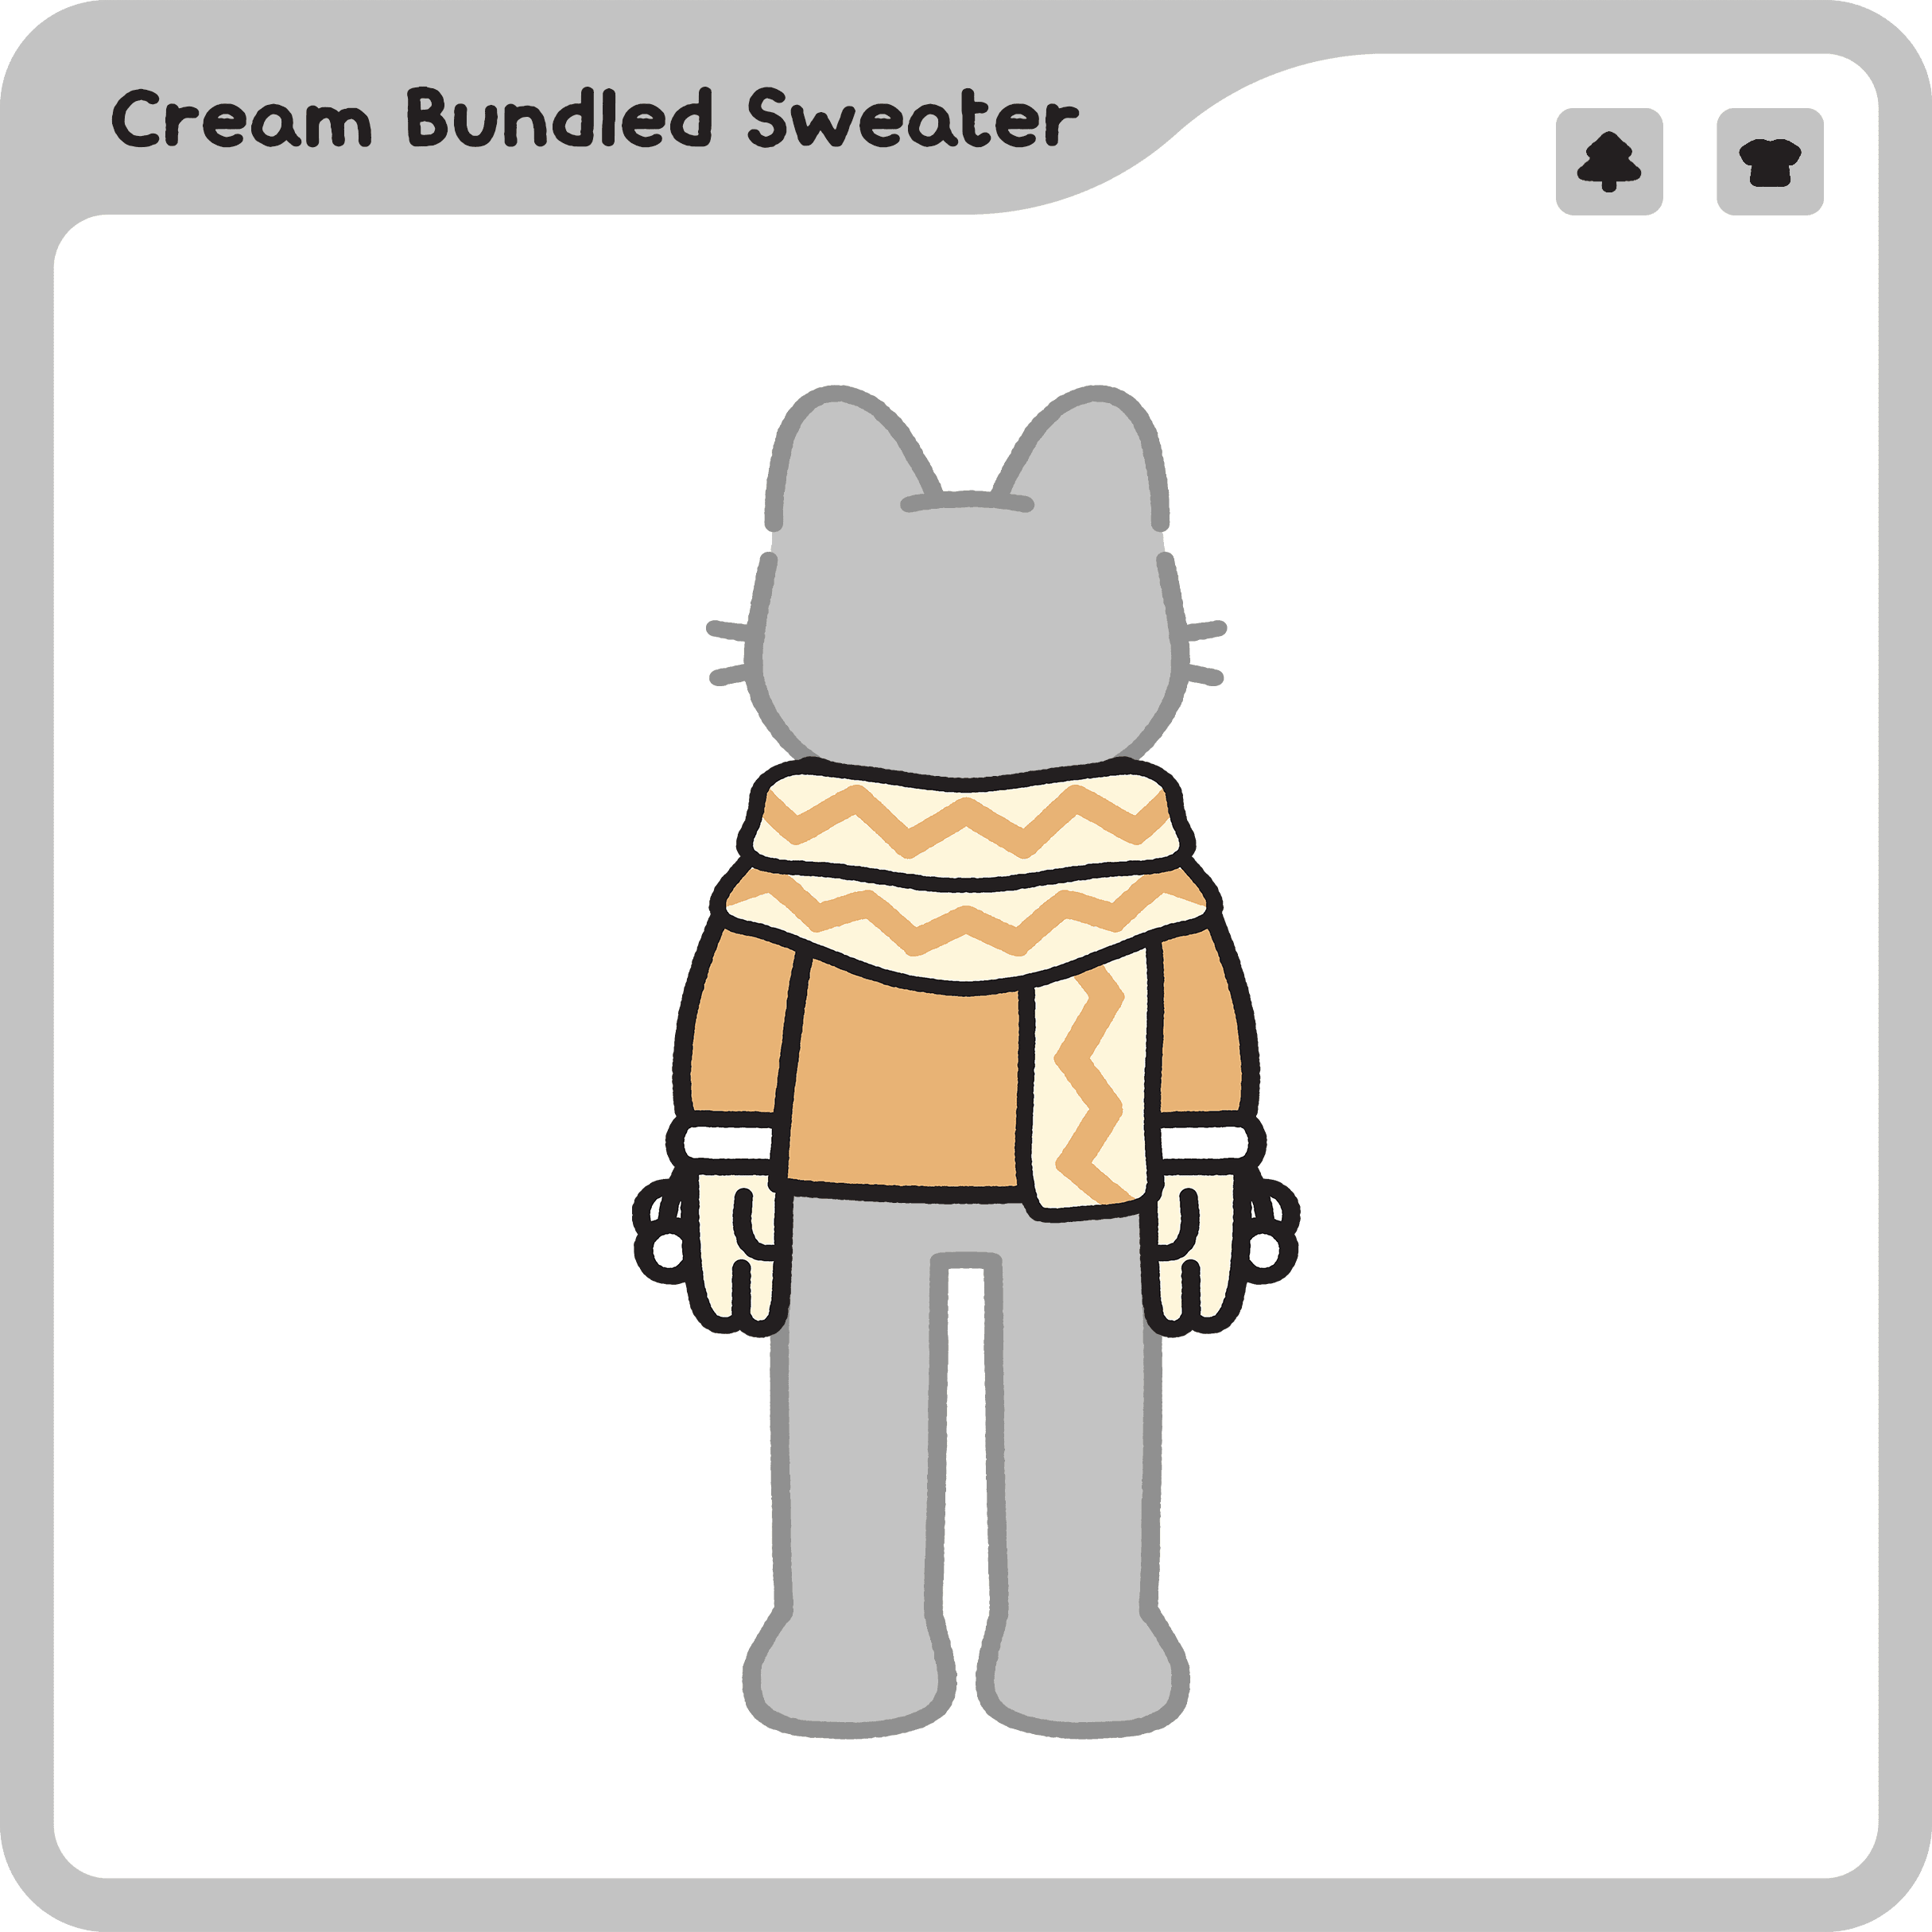 Cream Bundled Up Sweater